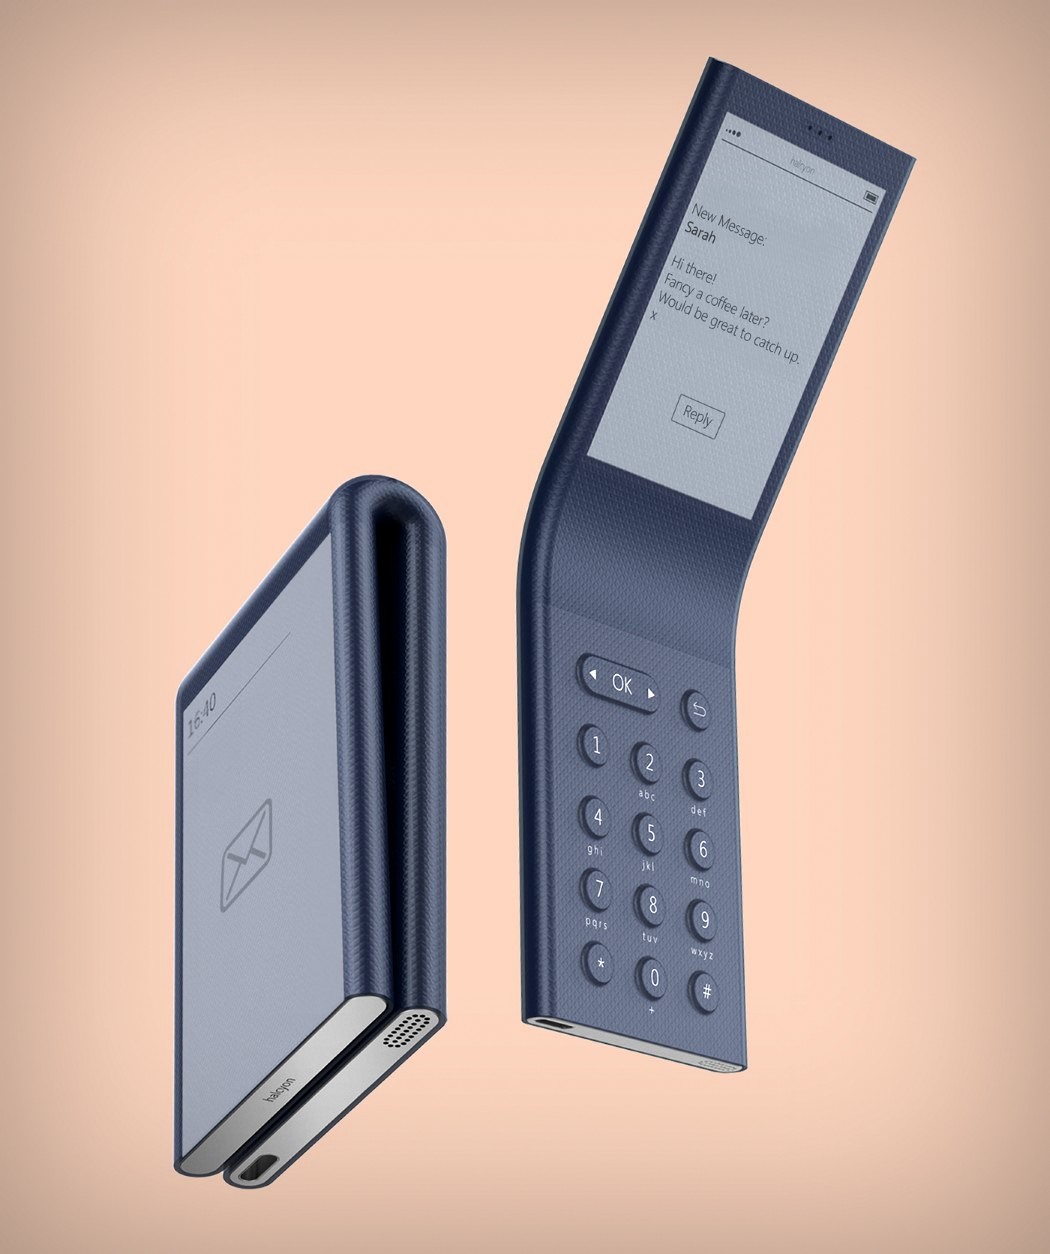 The world's prettiest Dumb-phone - Yanko Design